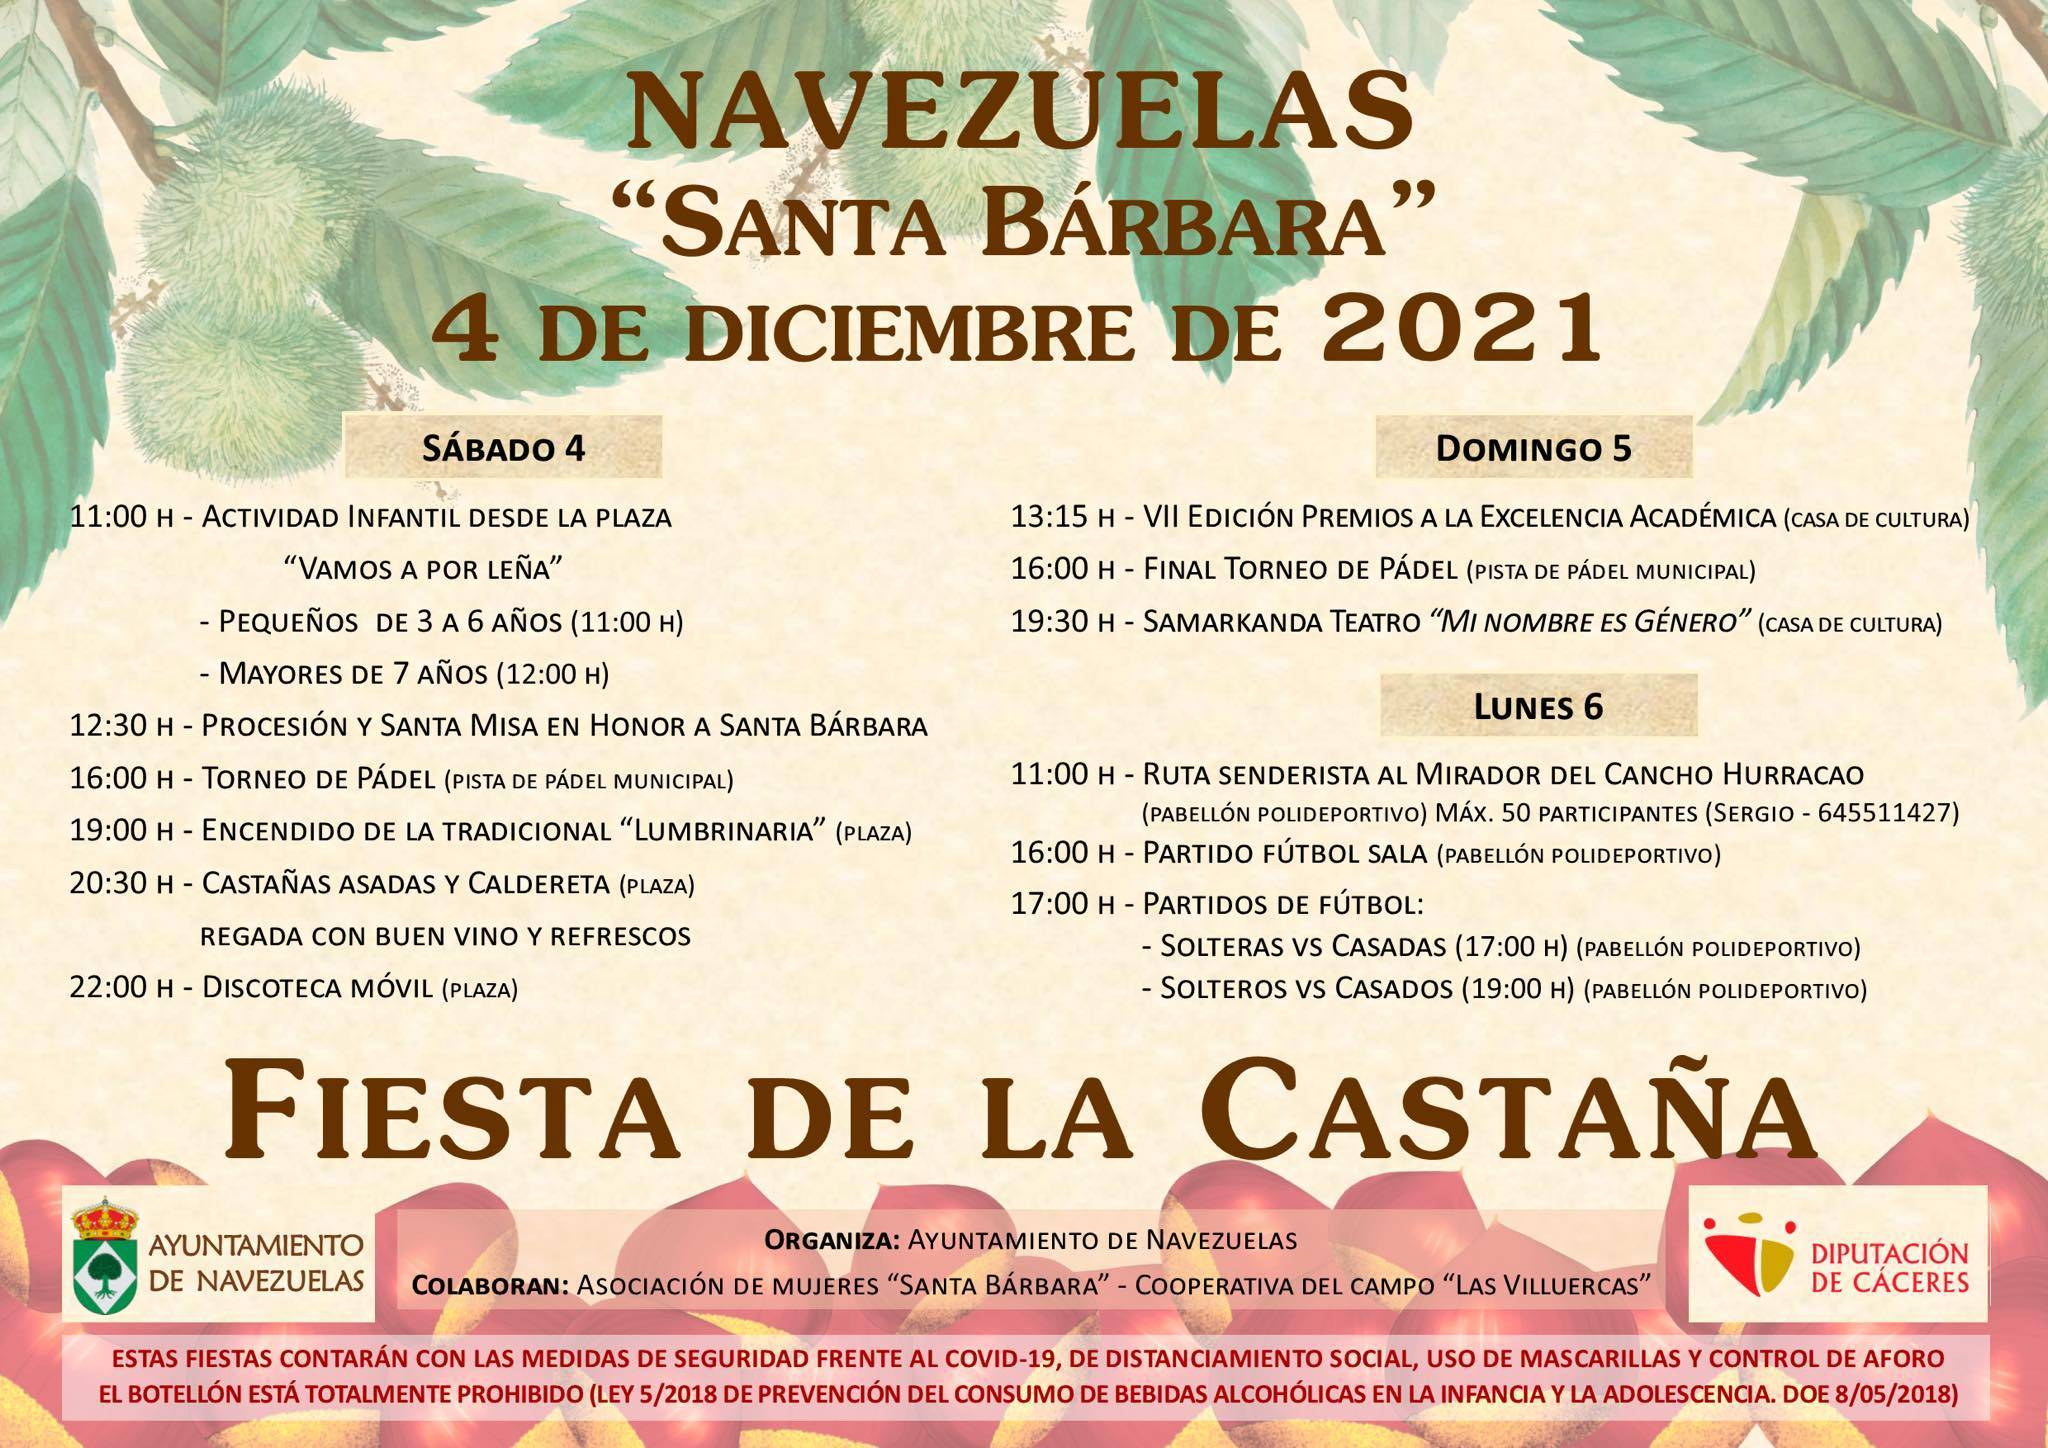 Santa Bárbara (2021) - Navezuelas (Cáceres)